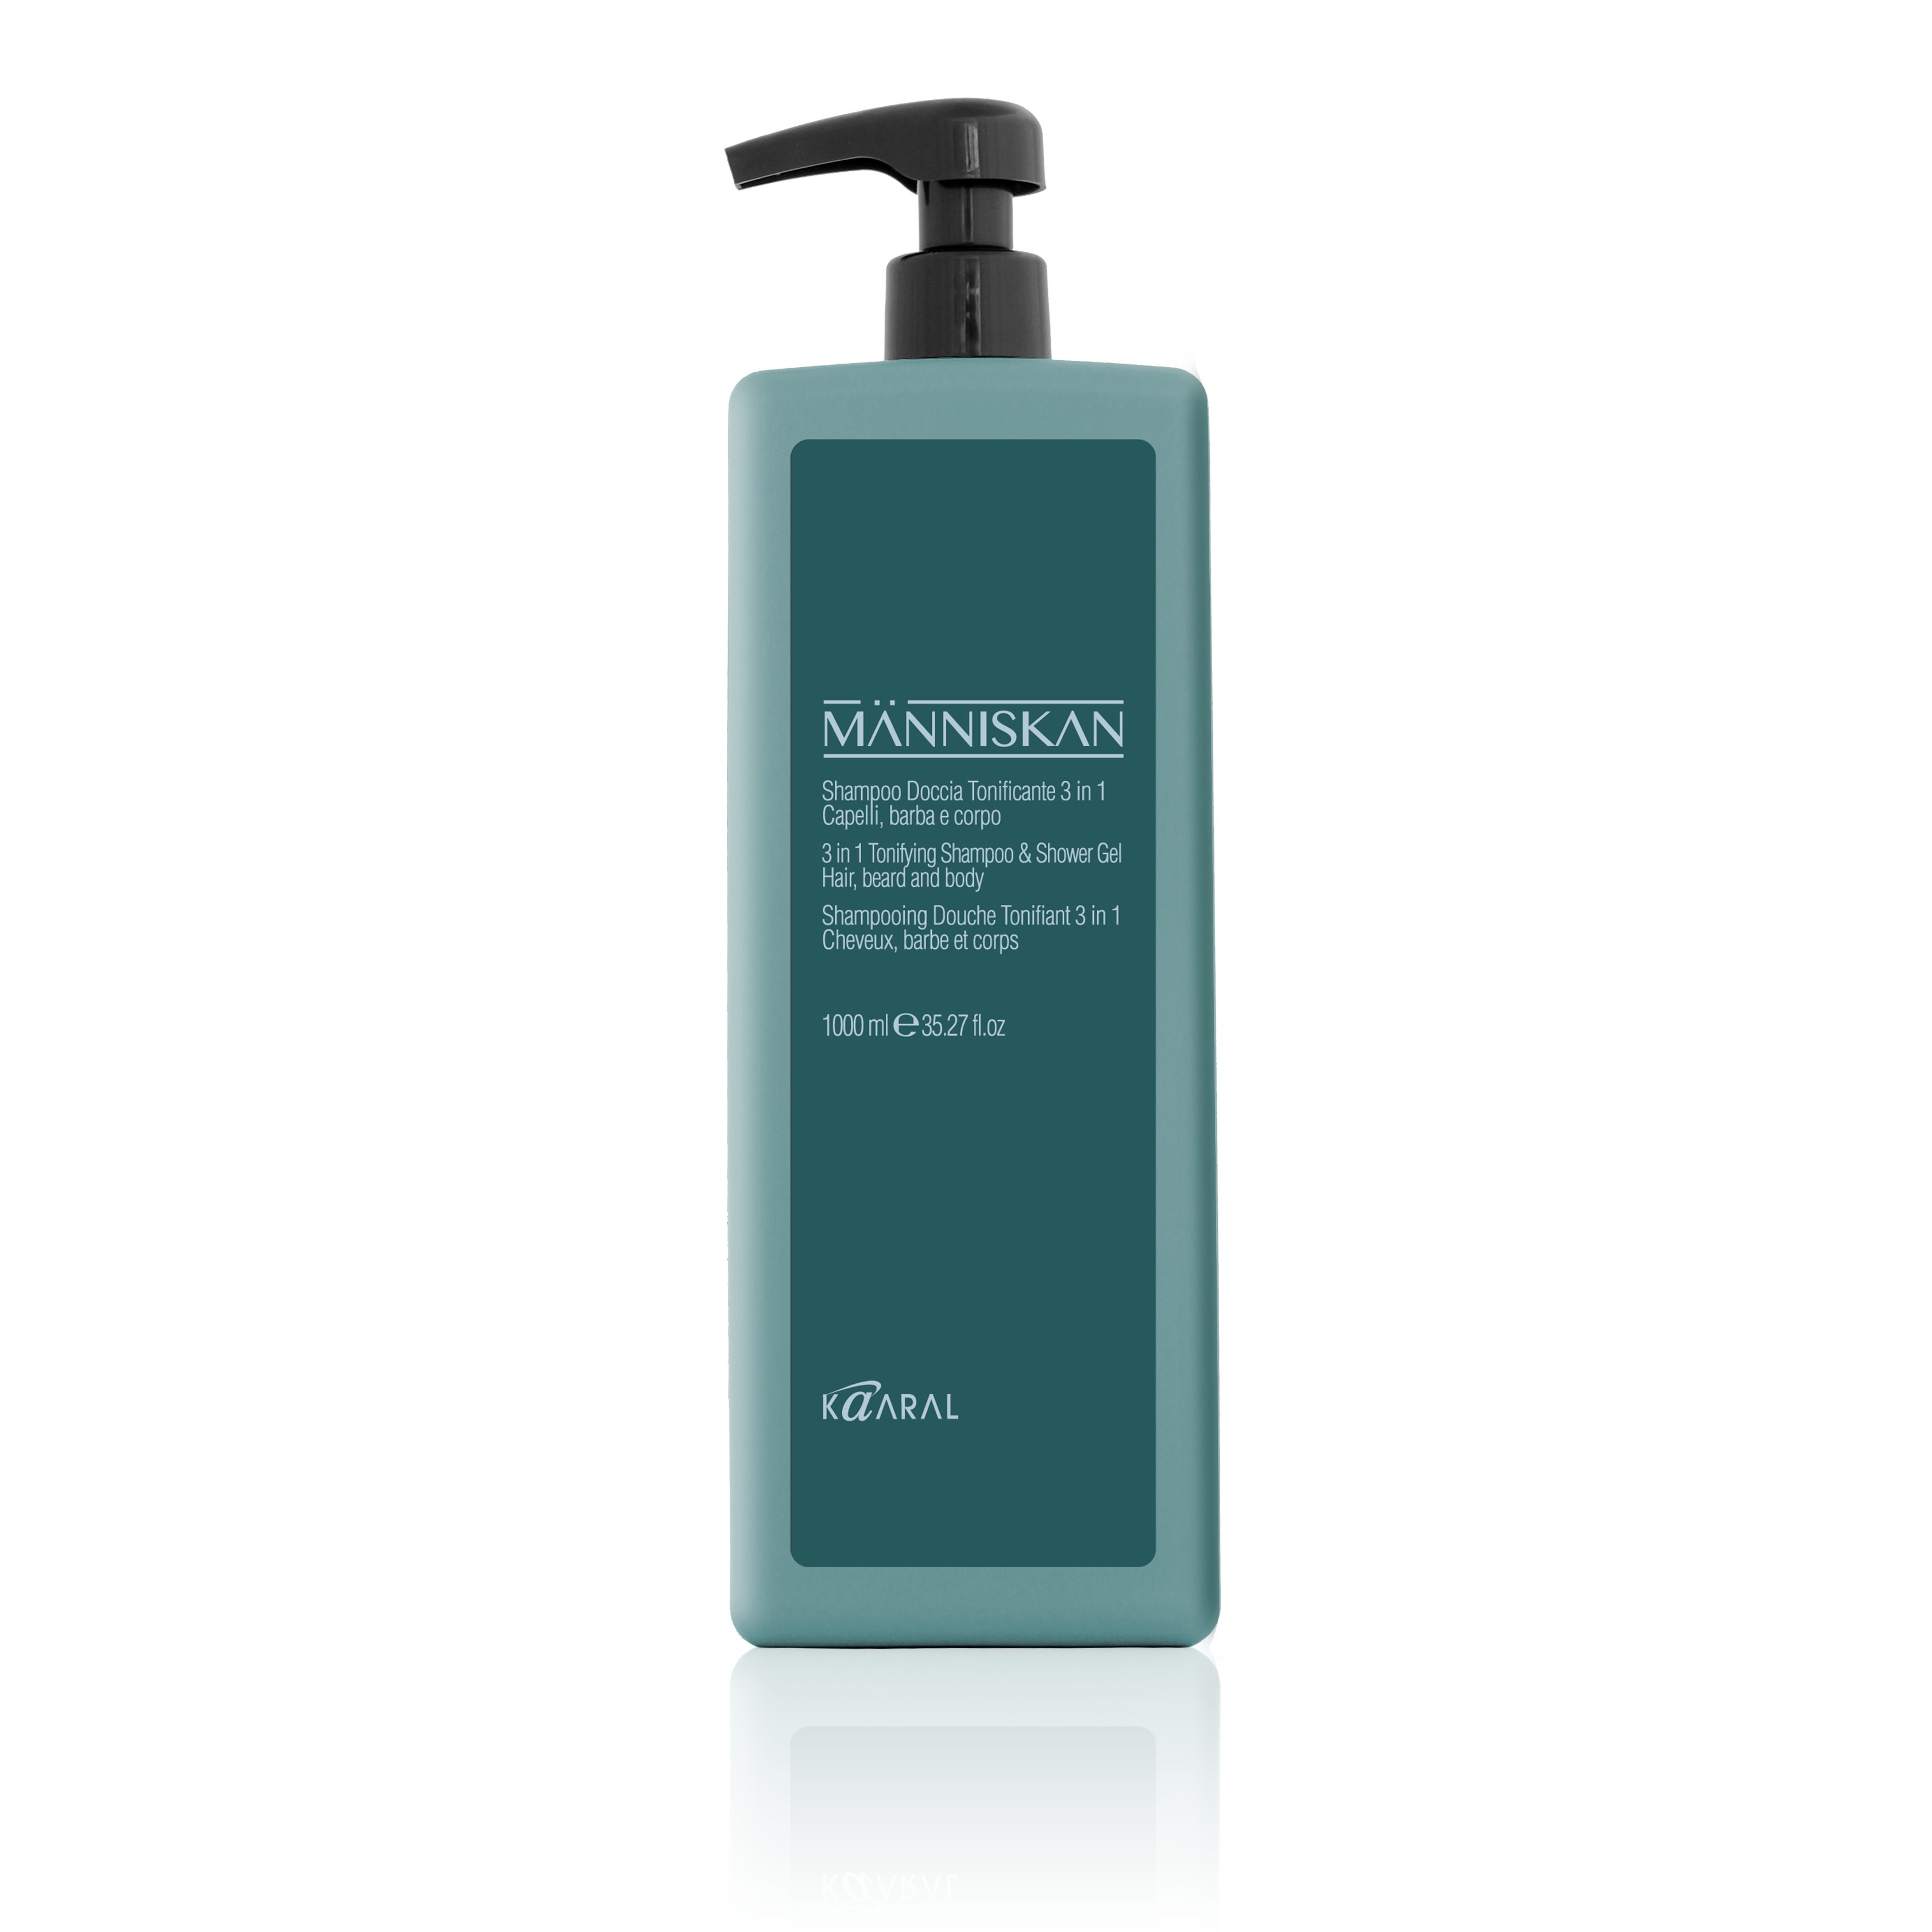 Människan - 3 in 1 Tonifying Shampoo & Shower Gel - Creata Beauty - Professional Beauty Products